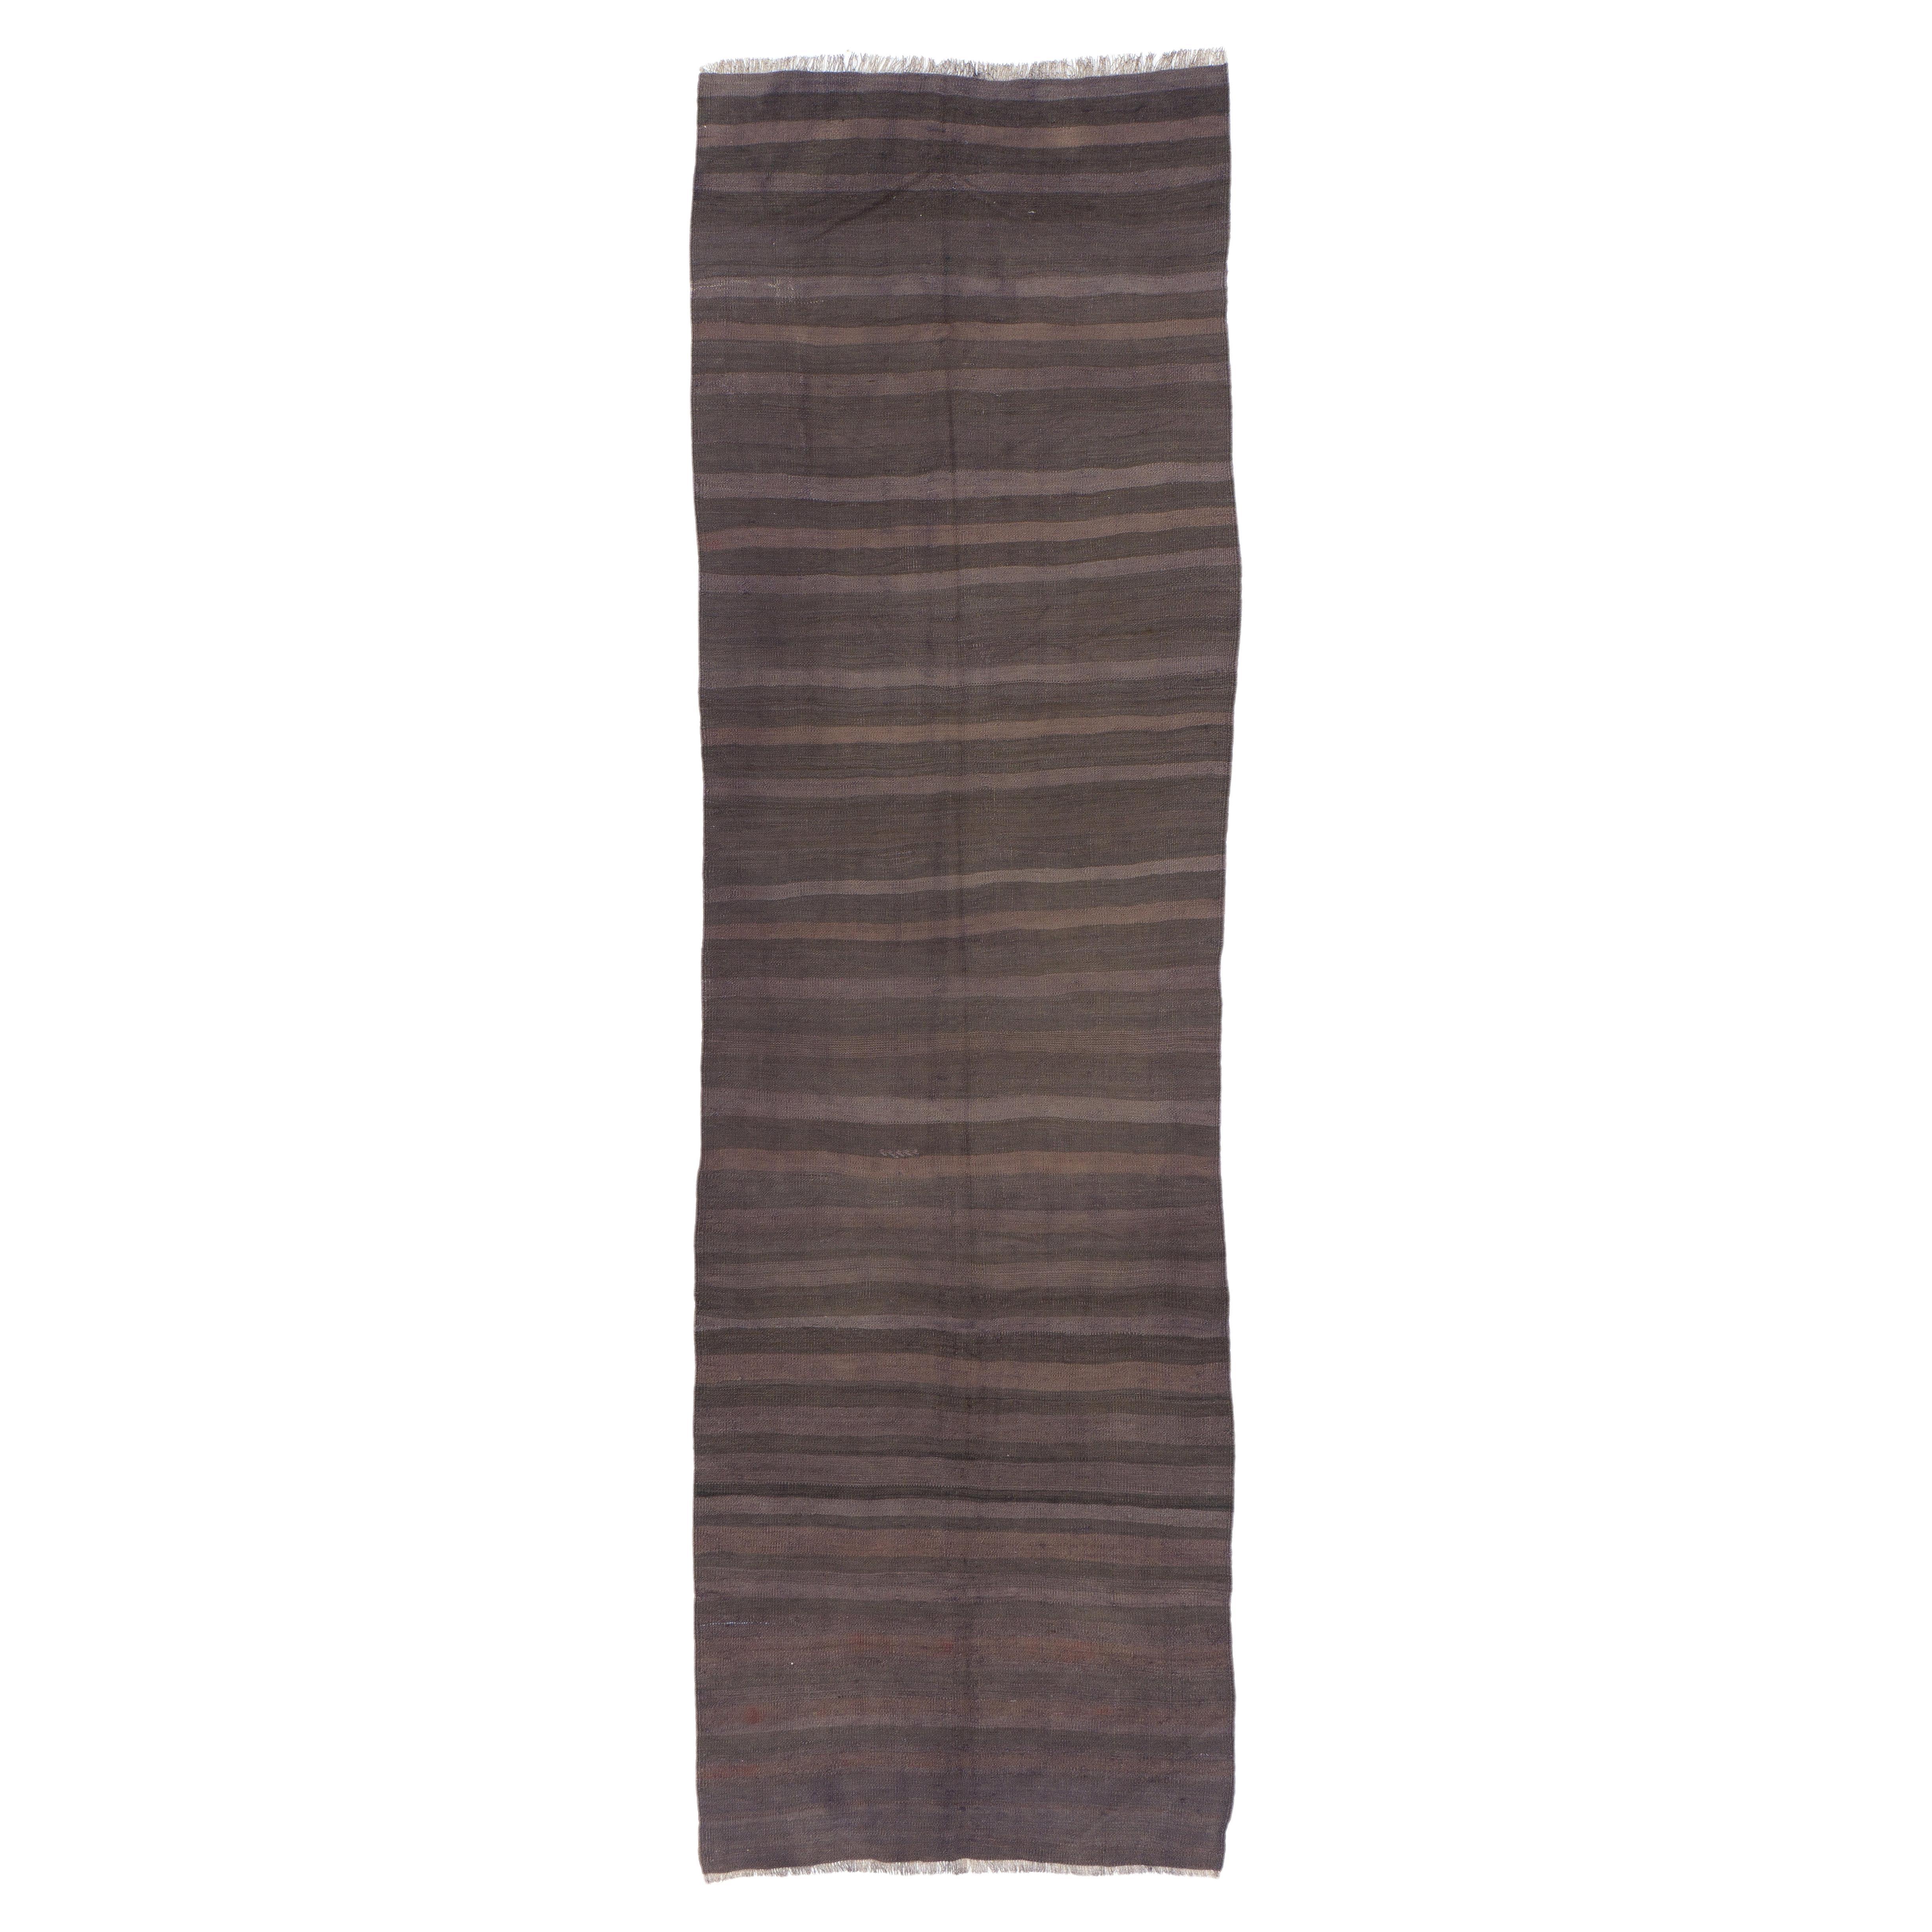 3.7x12 ft Vintage Flat-Woven Handmade Anatolian Wool Kilim Runner in Brown